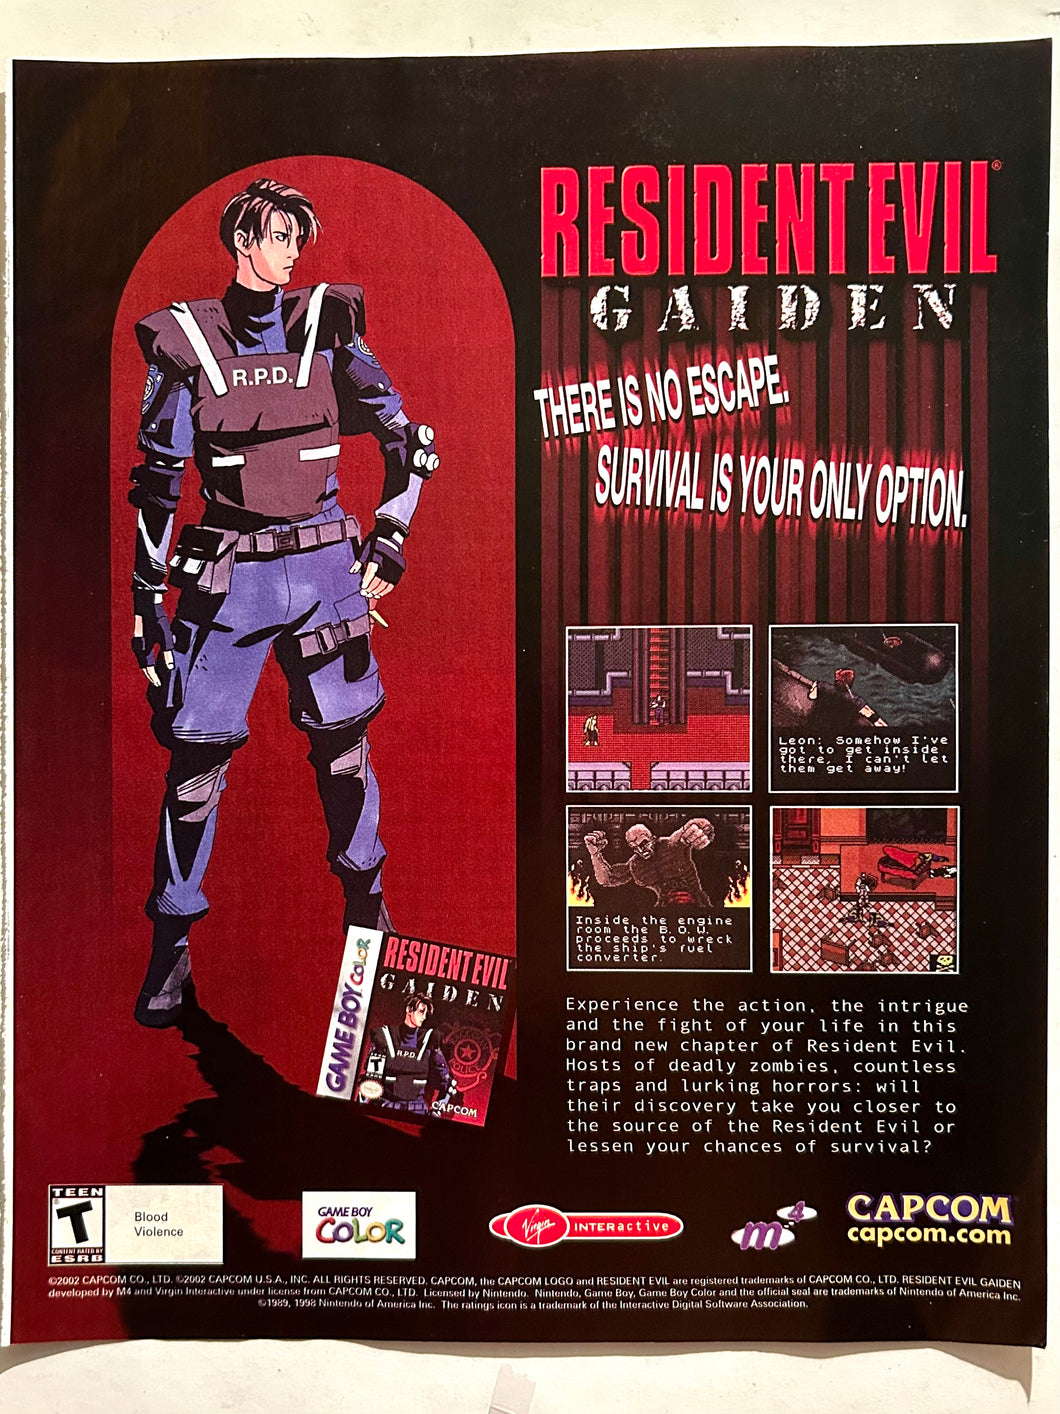 Resident Evil Gaiden - GBC - Original Vintage Advertisement - Print Ads - Laminated A4 Poster